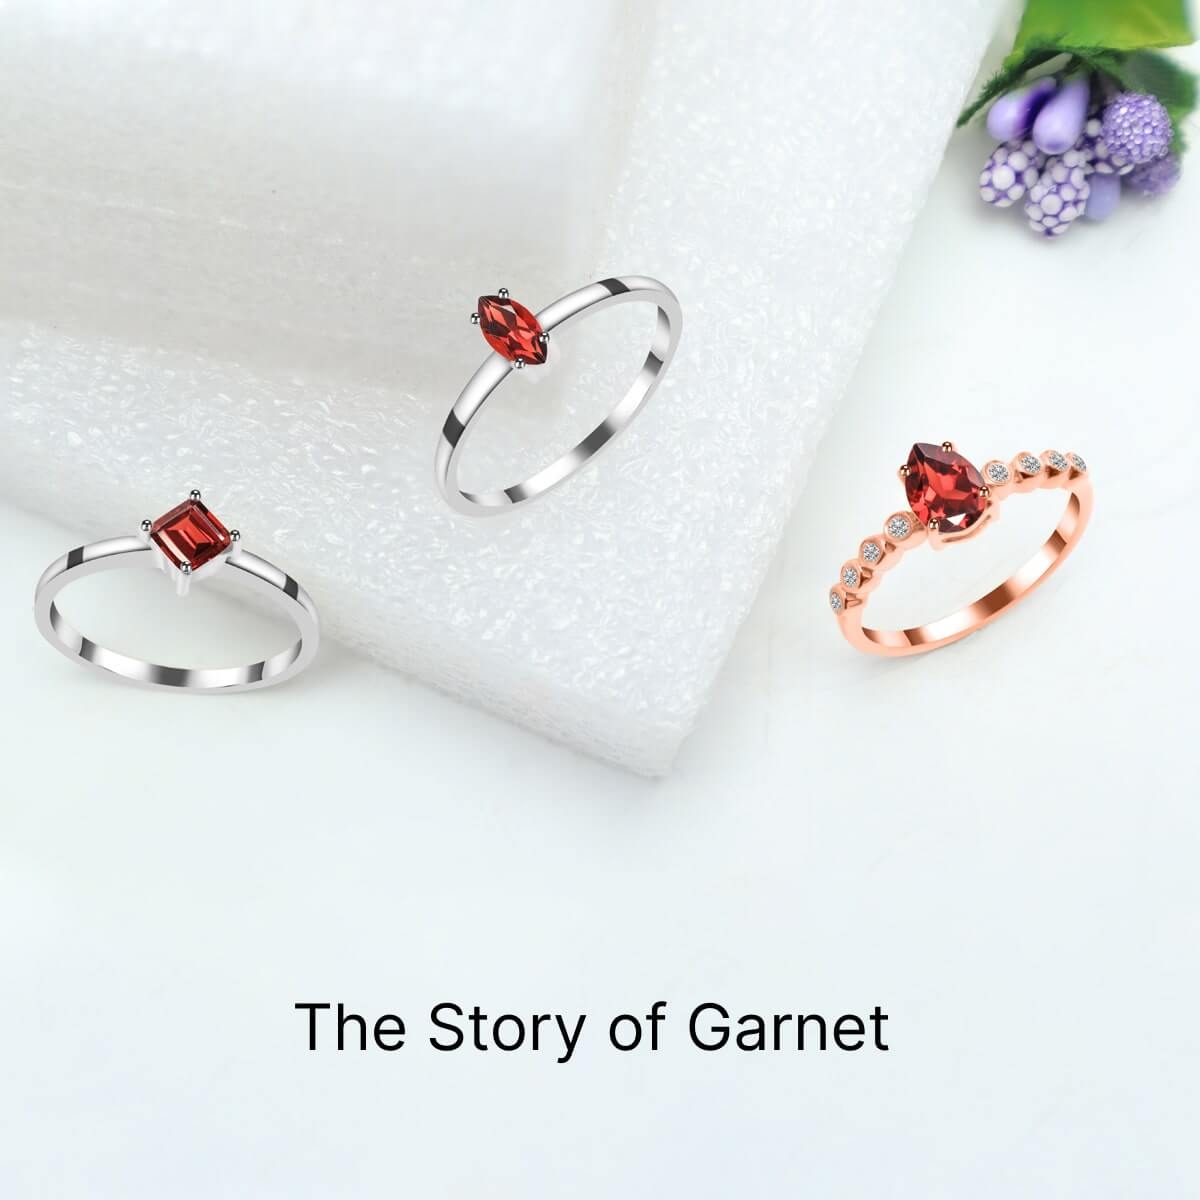 Garnet History